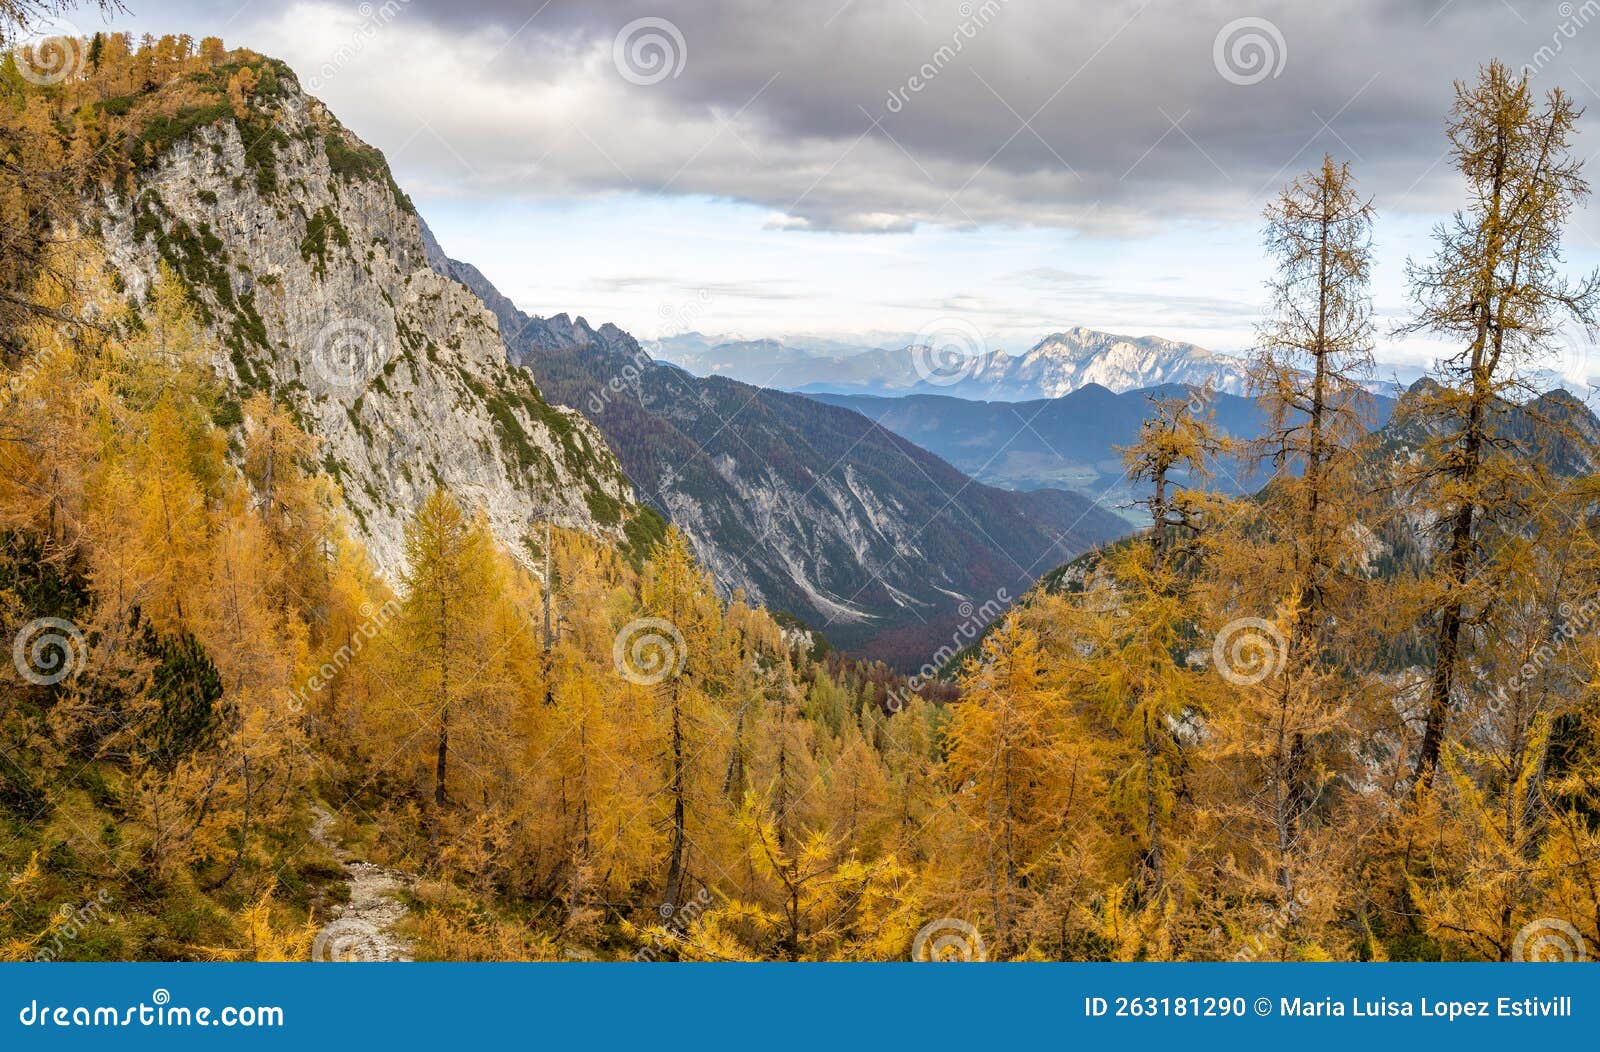 view of mountains from slemenova spica, eslovenia